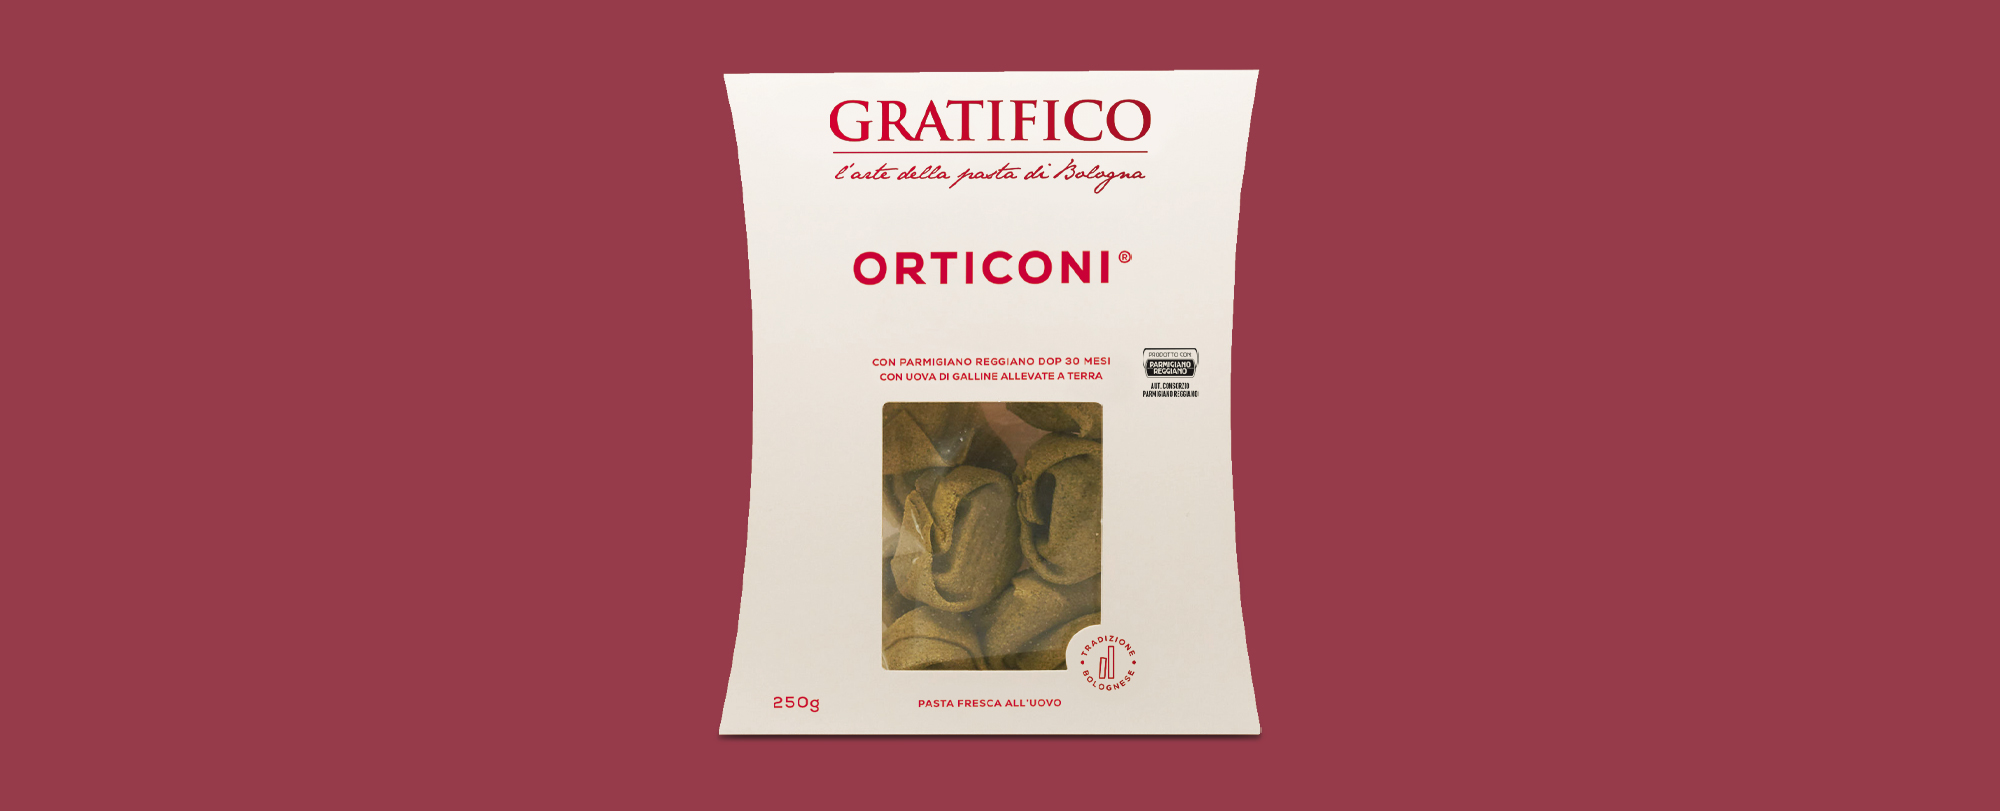 otriconi-pack-mockup